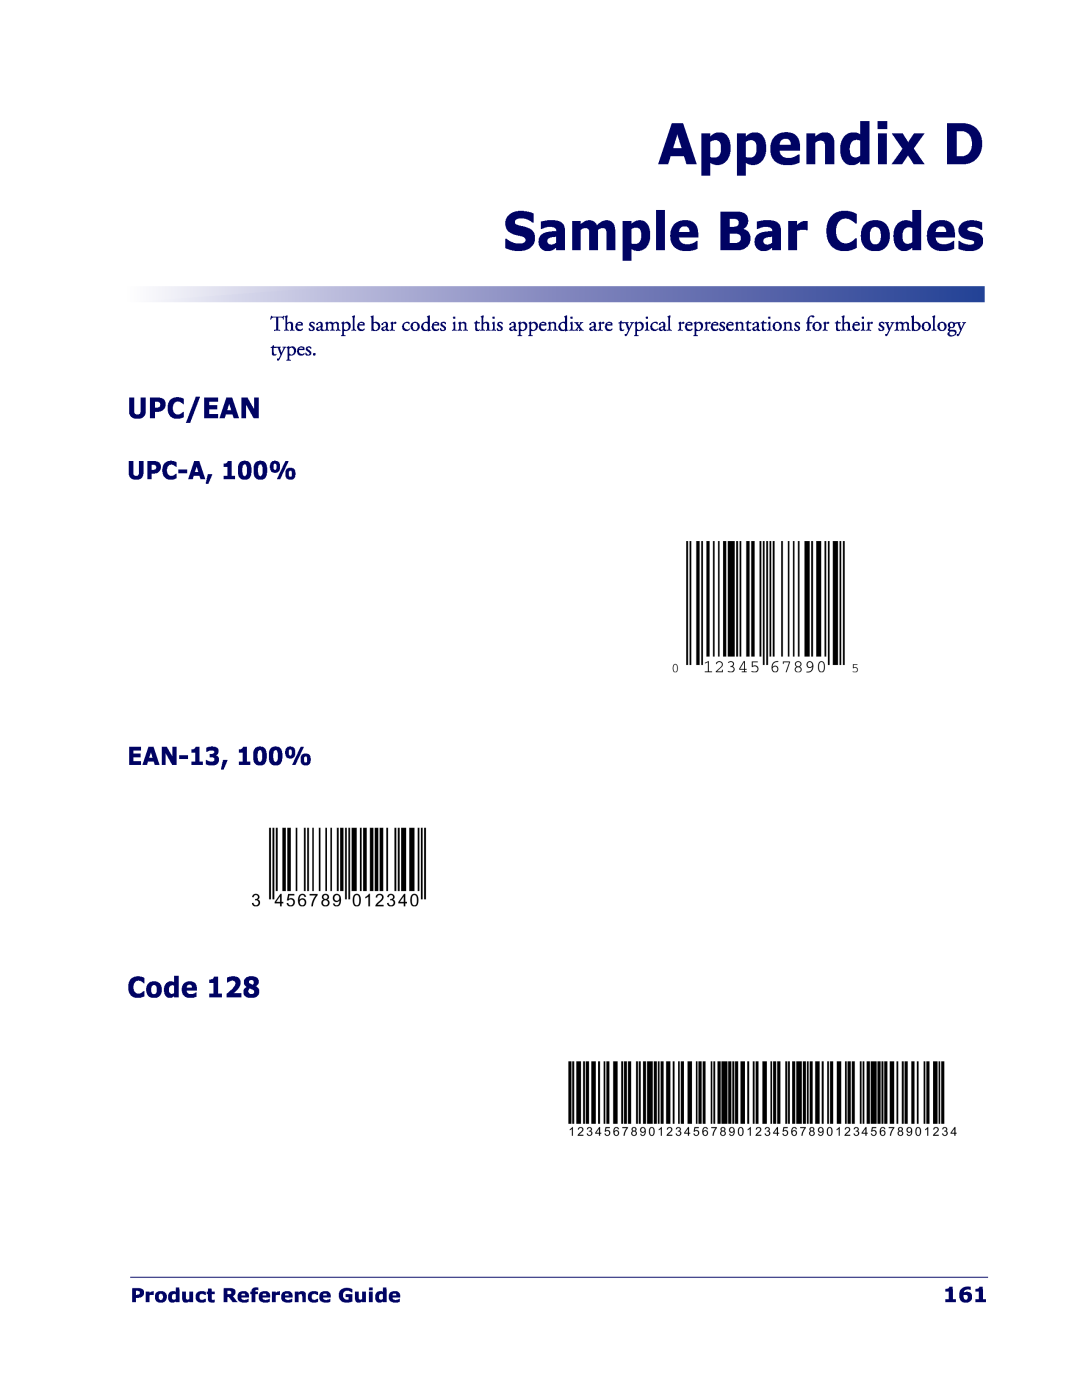 Datalogic Scanning QD 2300 manual Appendix D, Sample Bar Codes, UPC-A, 100%, EAN-13, 100%, Upc/Ean, Product Reference Guide 